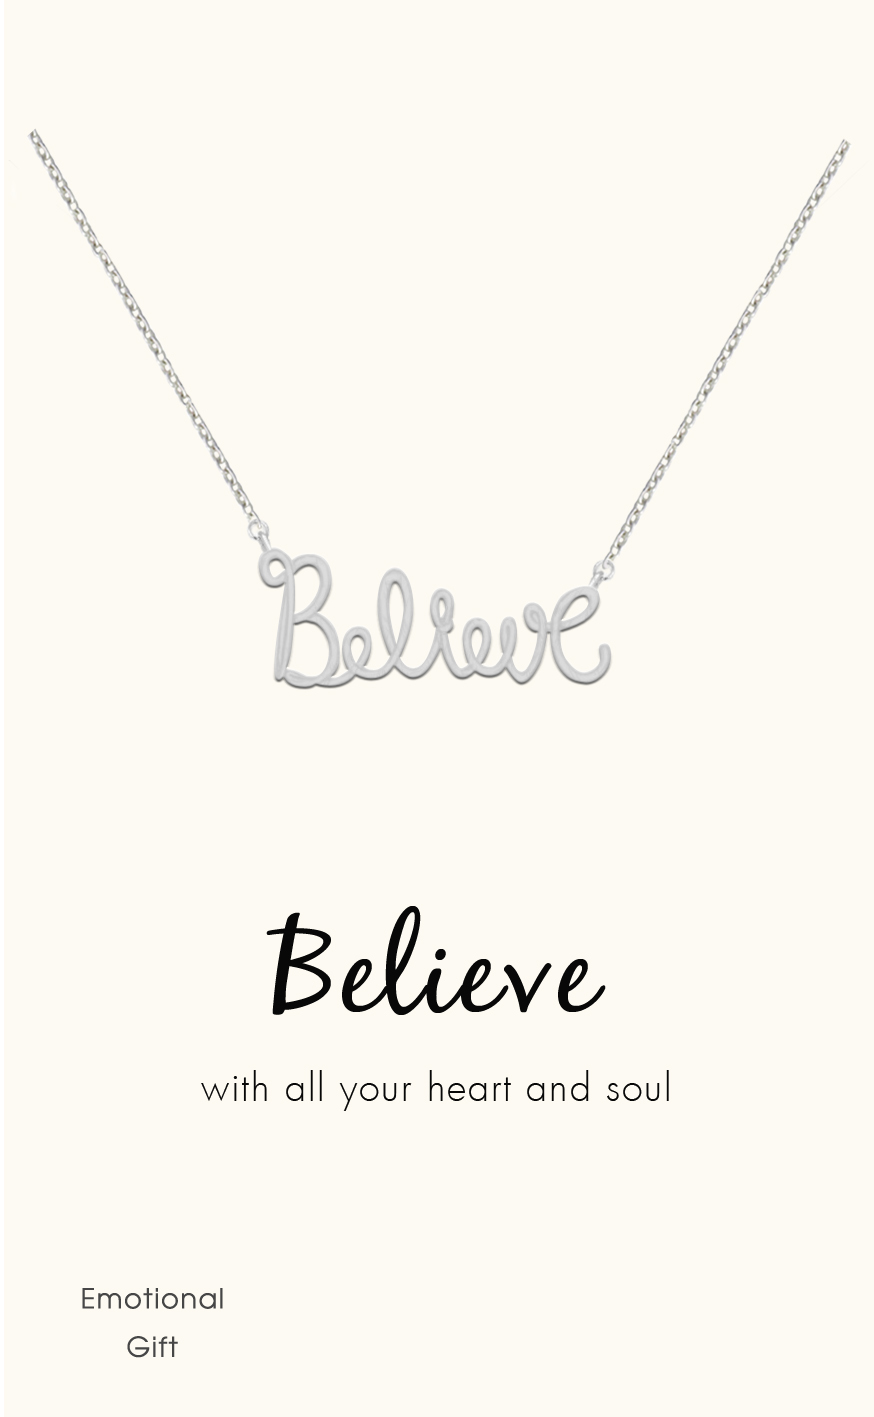 Believe silver pendant